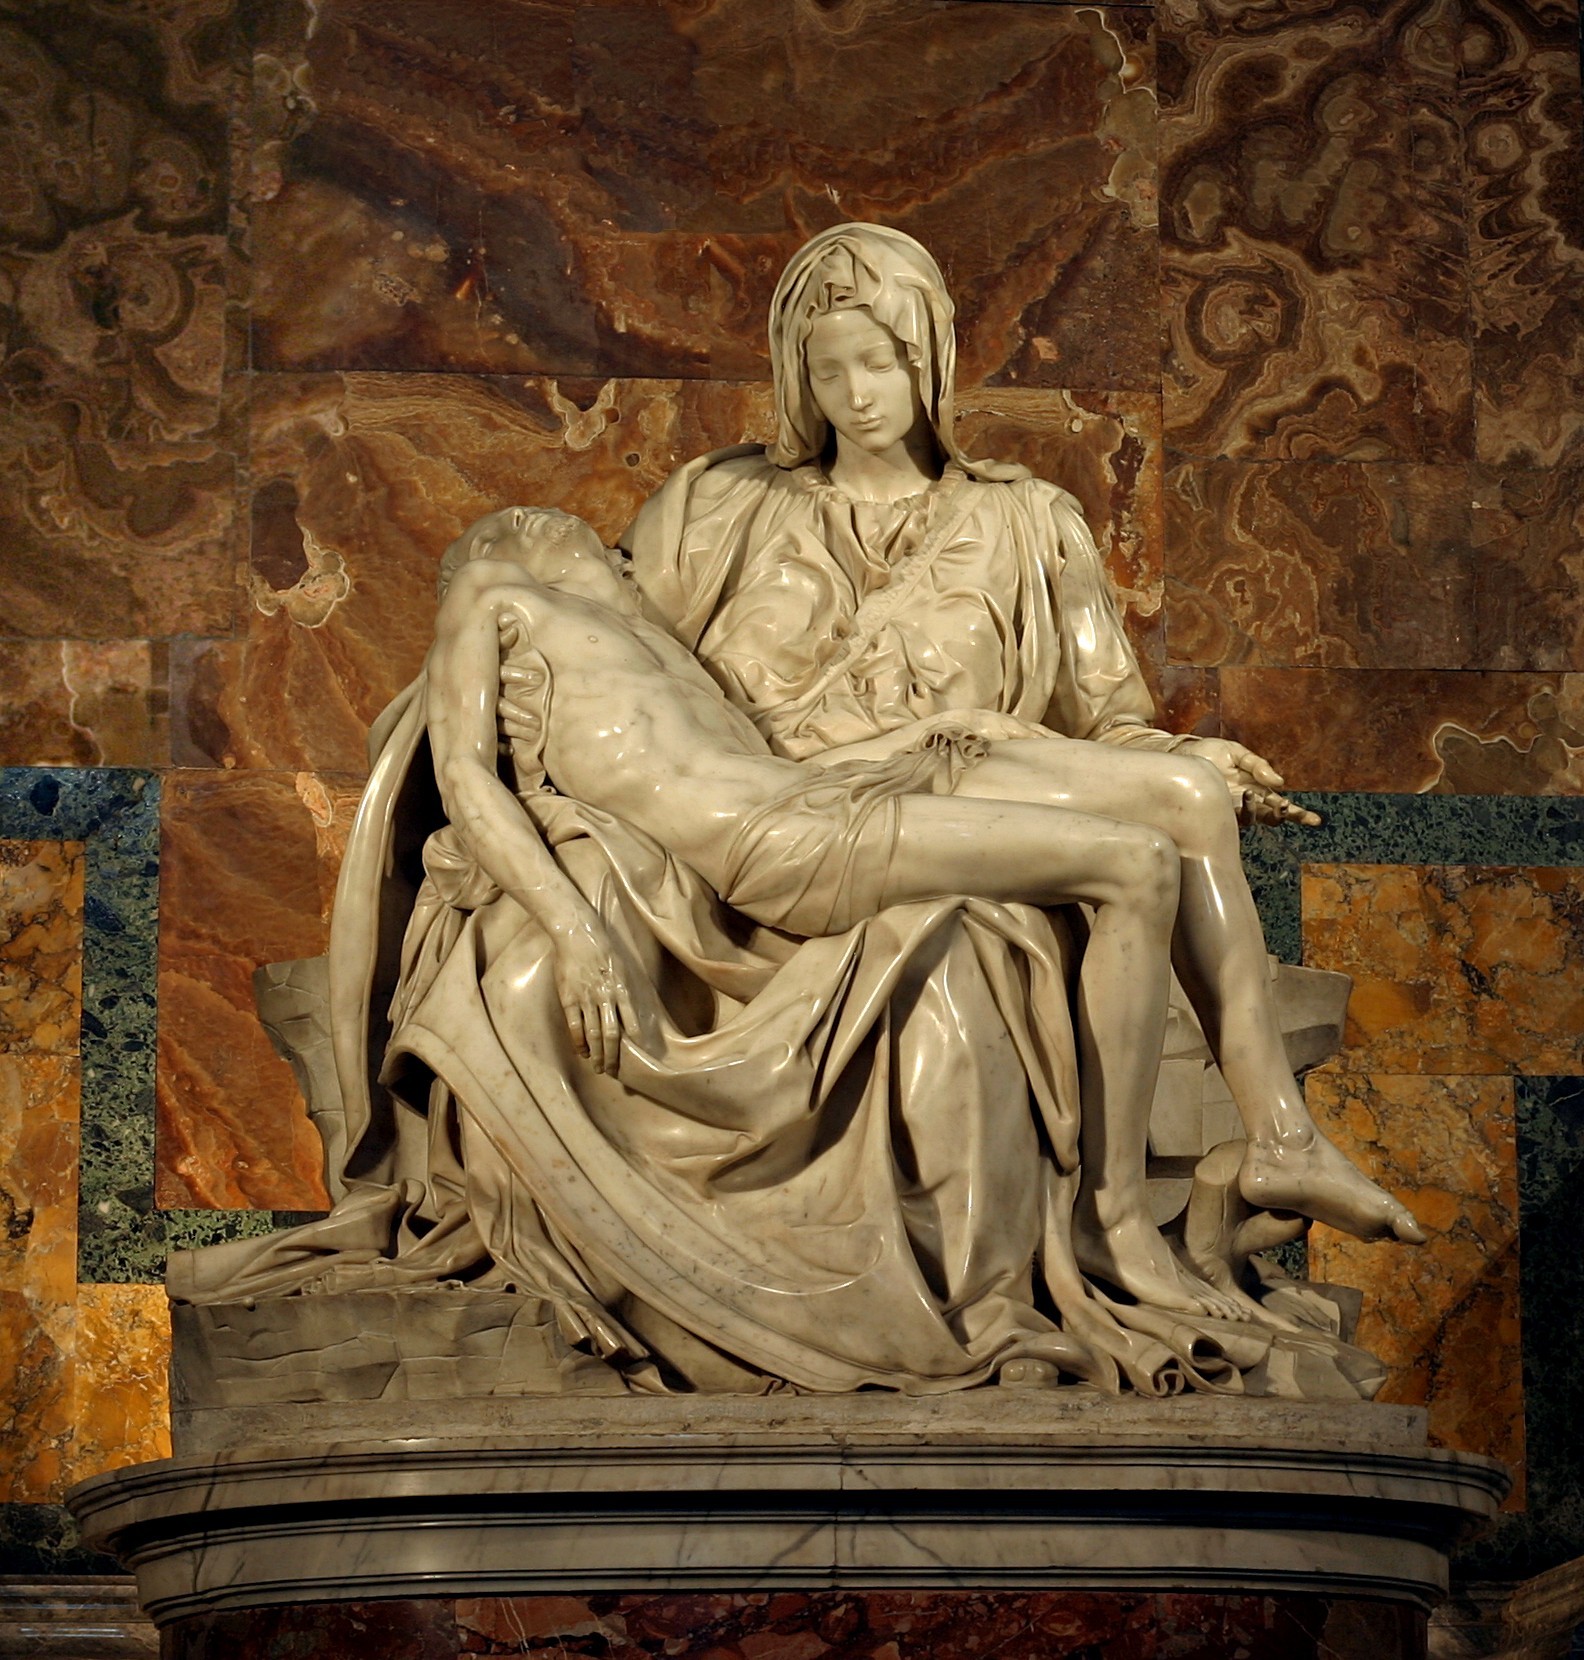 Pieta by  Michelangelo - 1498-99 - 1.74 m x 1.95 m St. Peter's Basilica, Vatican City